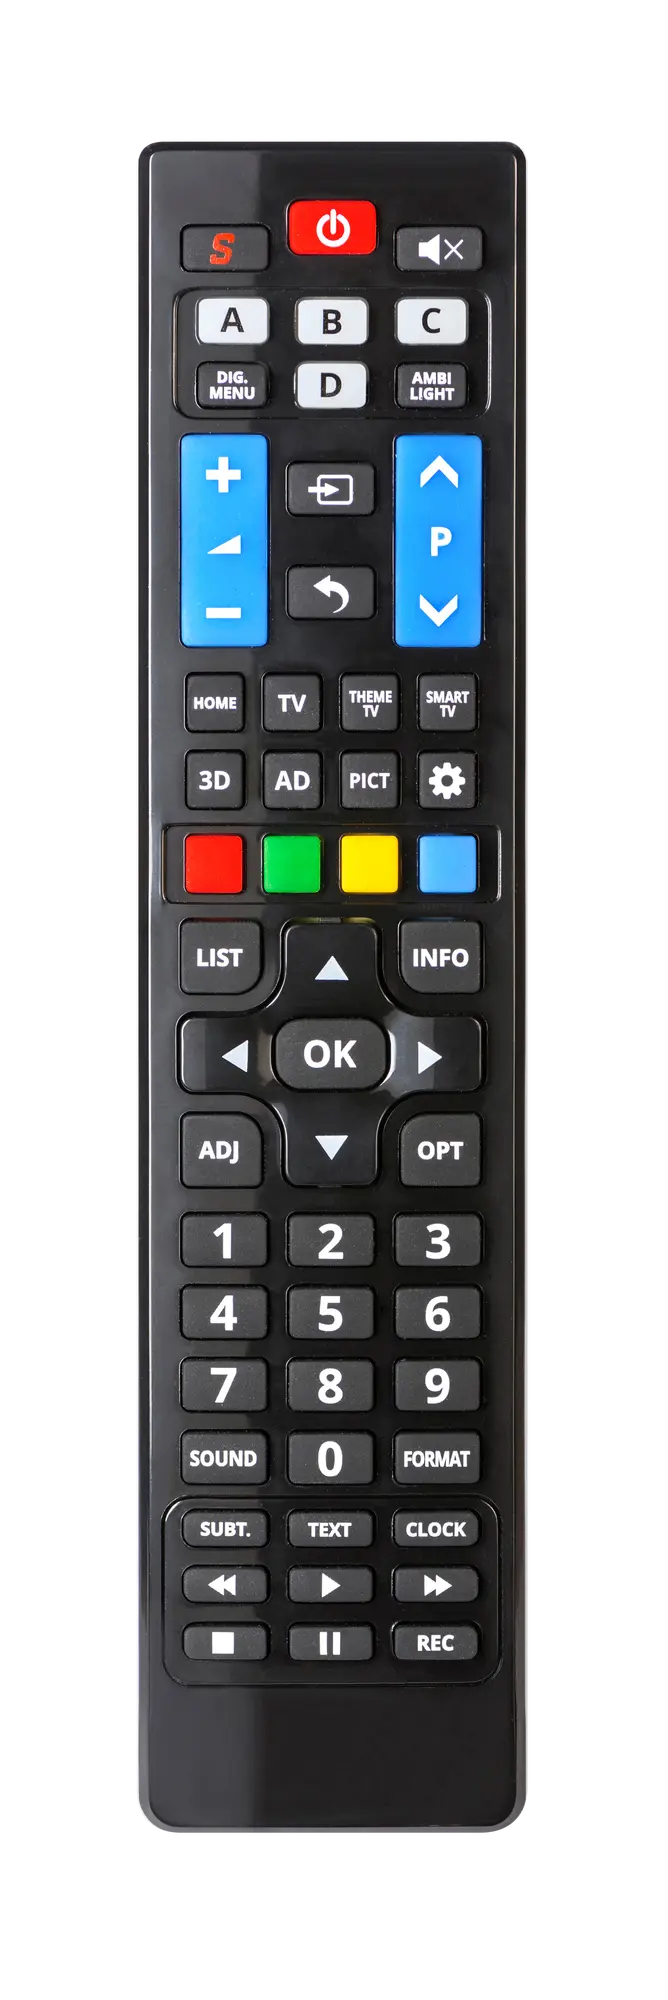 Mando a distancia Universal para Smart TV Philips, nuevo mando a